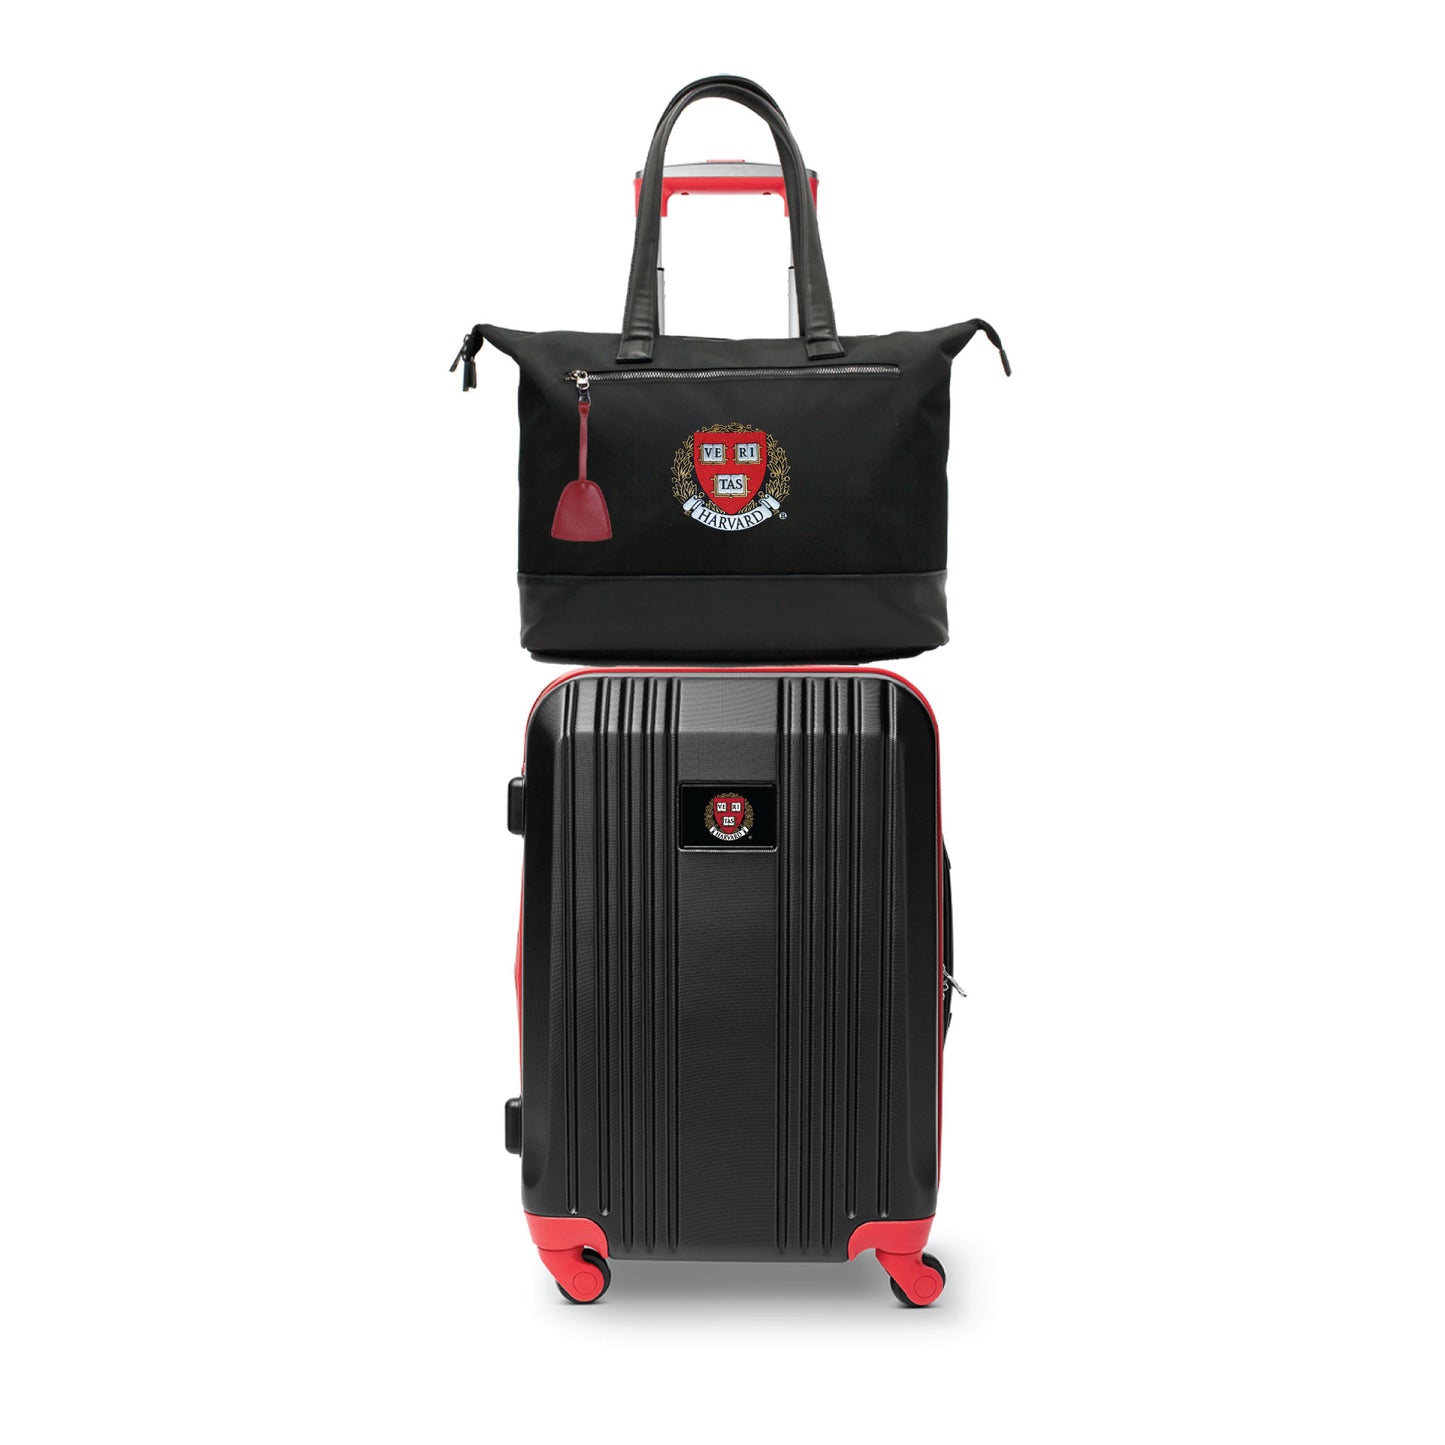 Harvard Crimson Premium Laptop Tote Bag and Luggage Set